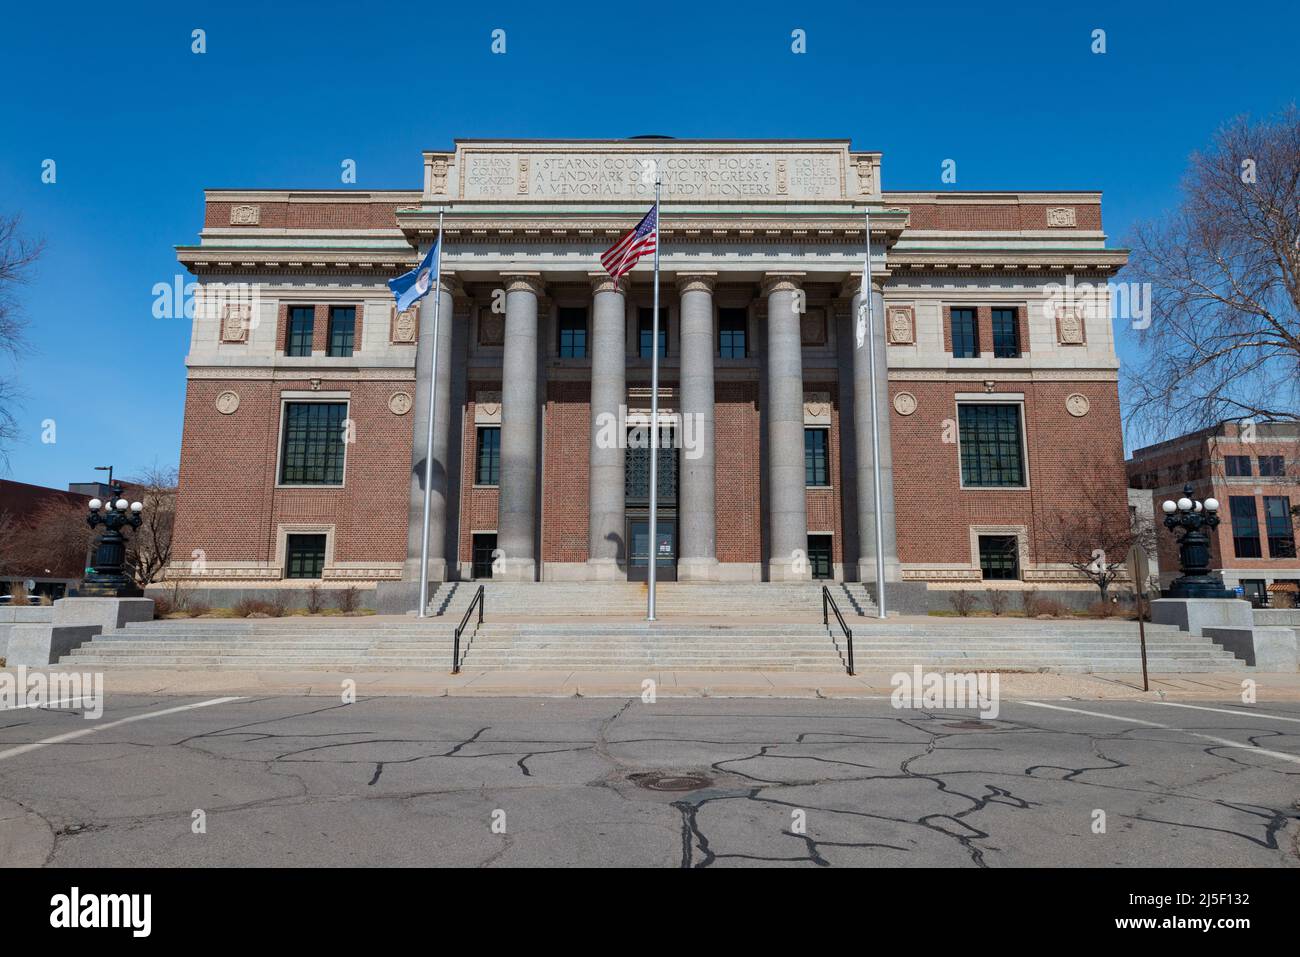 SAINT CLOUD, MINNESOTA - 19. Februar 2022: Das Stearns County Courthouse, das sich am 725 Courthouse Square befindet, wird fotografiert. Stockfoto